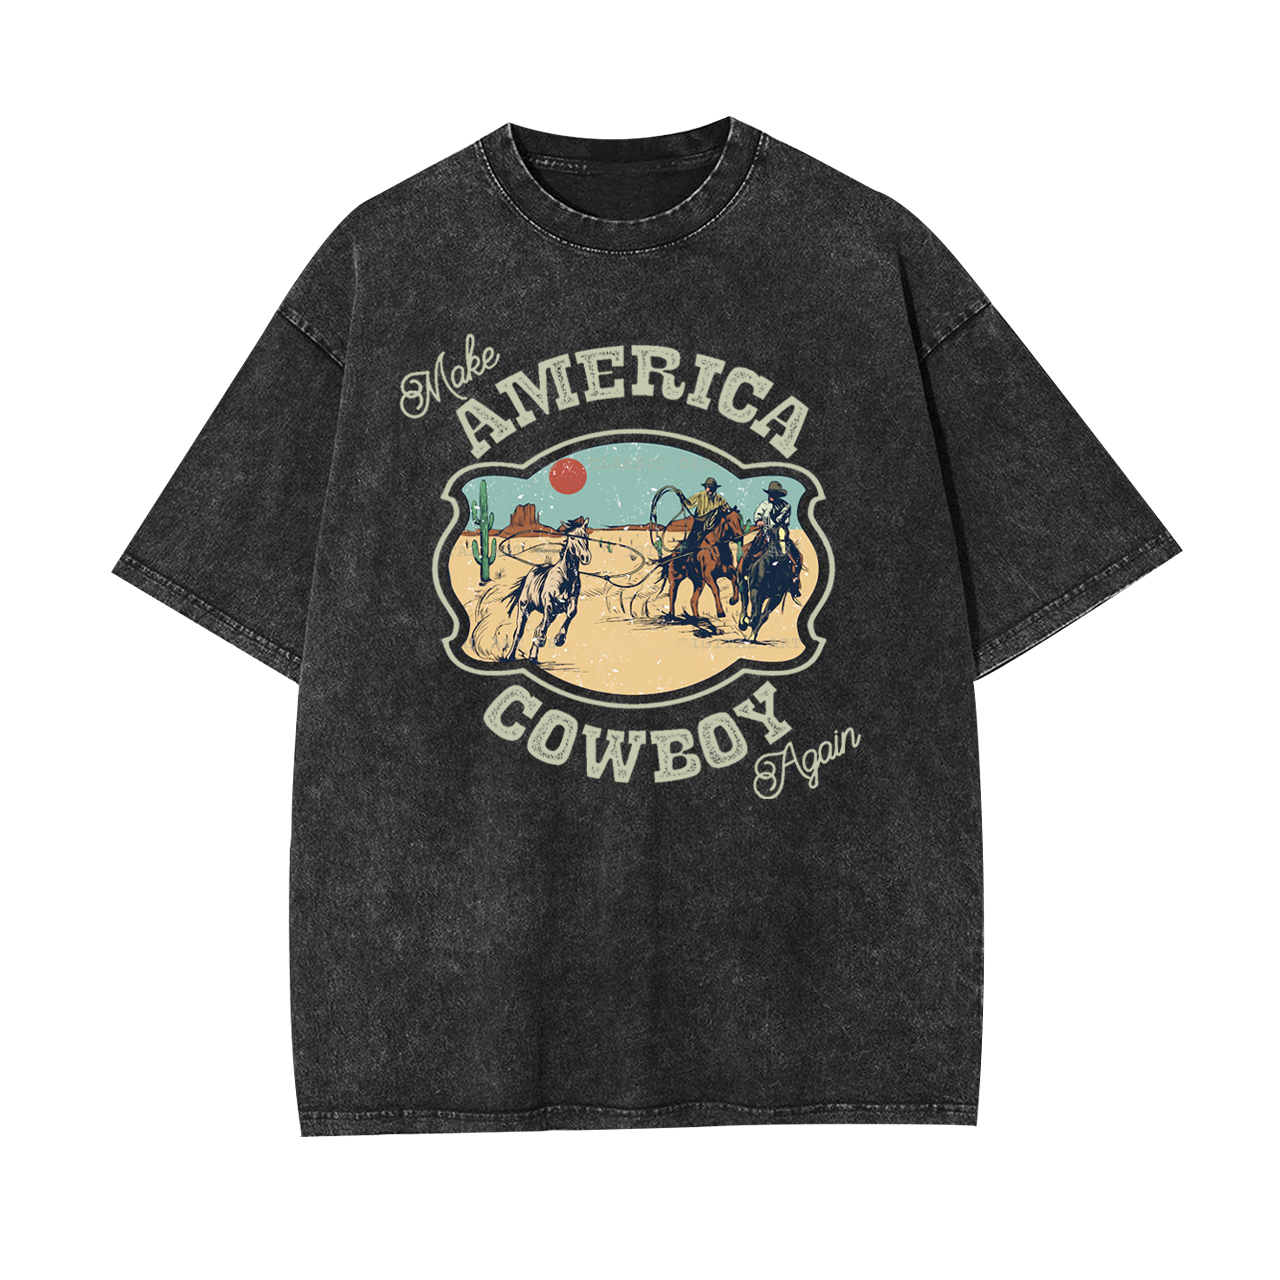 Make America Cowboy Again Garment-dye Tees